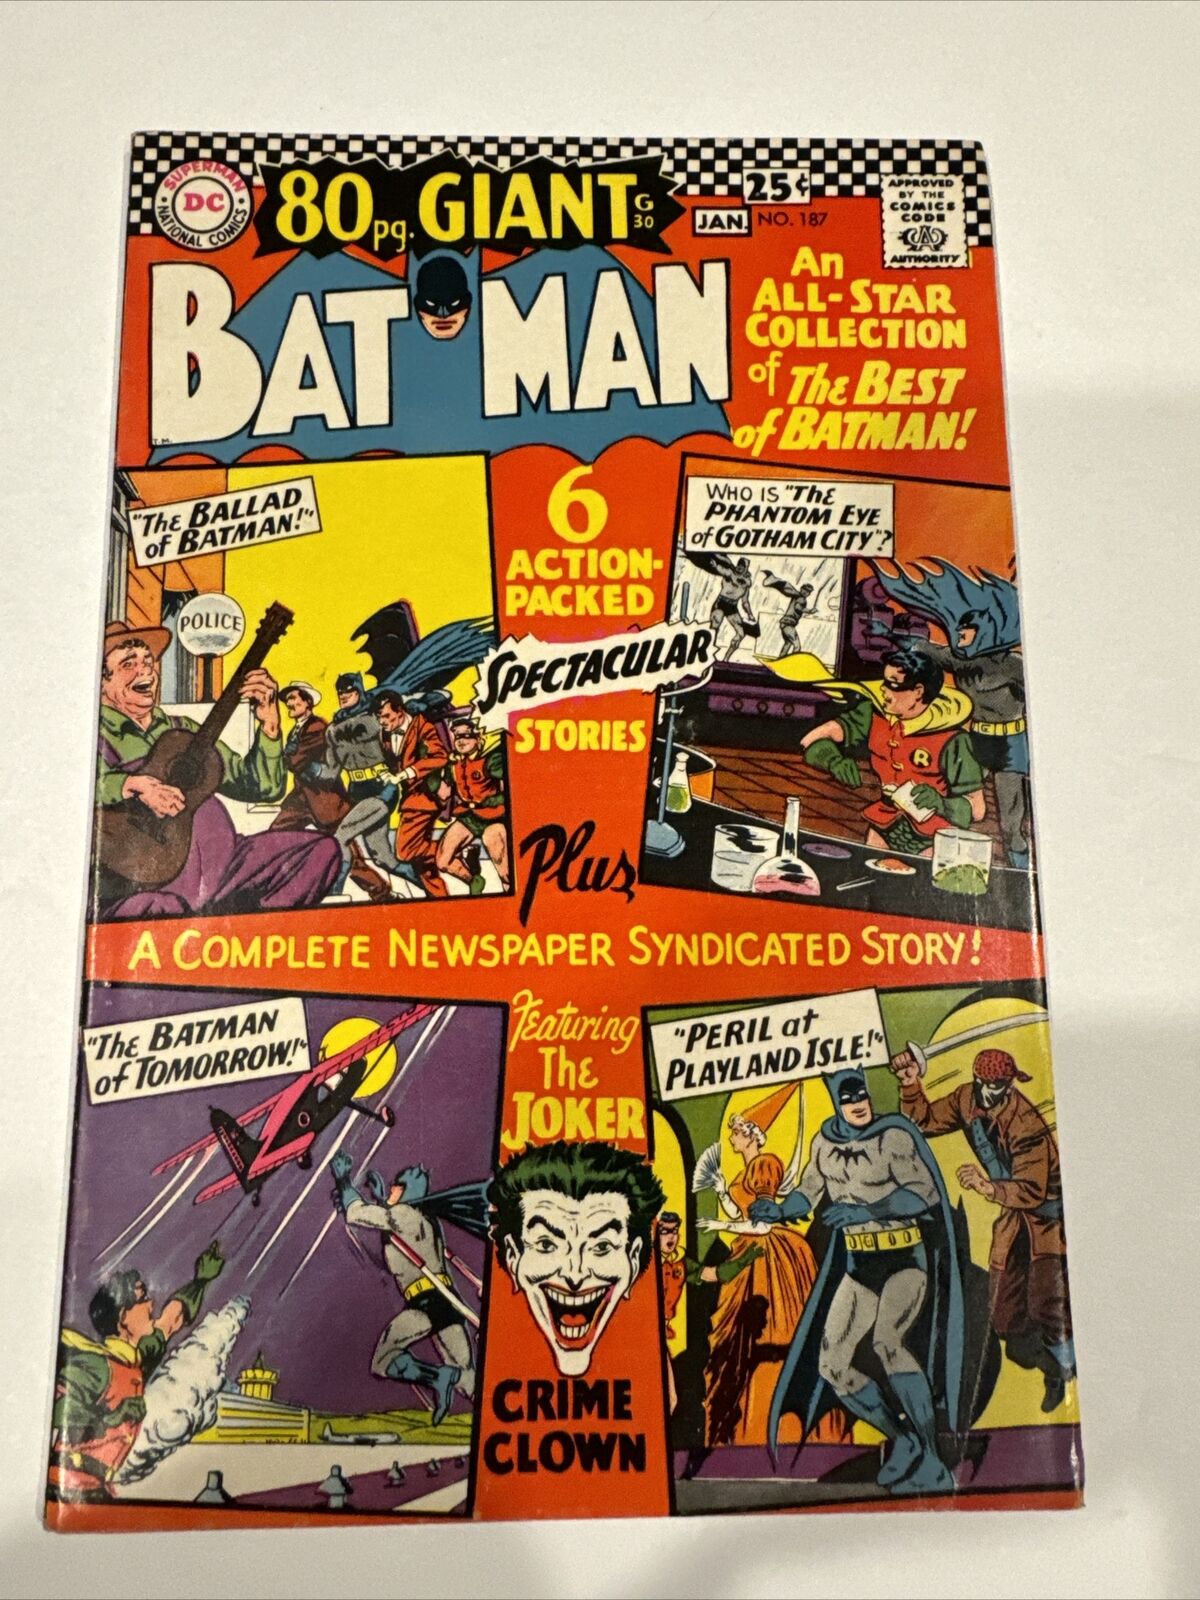 BATMAN #187 - 80 PAGE GIANT-SIZE 1967 DC COMICS